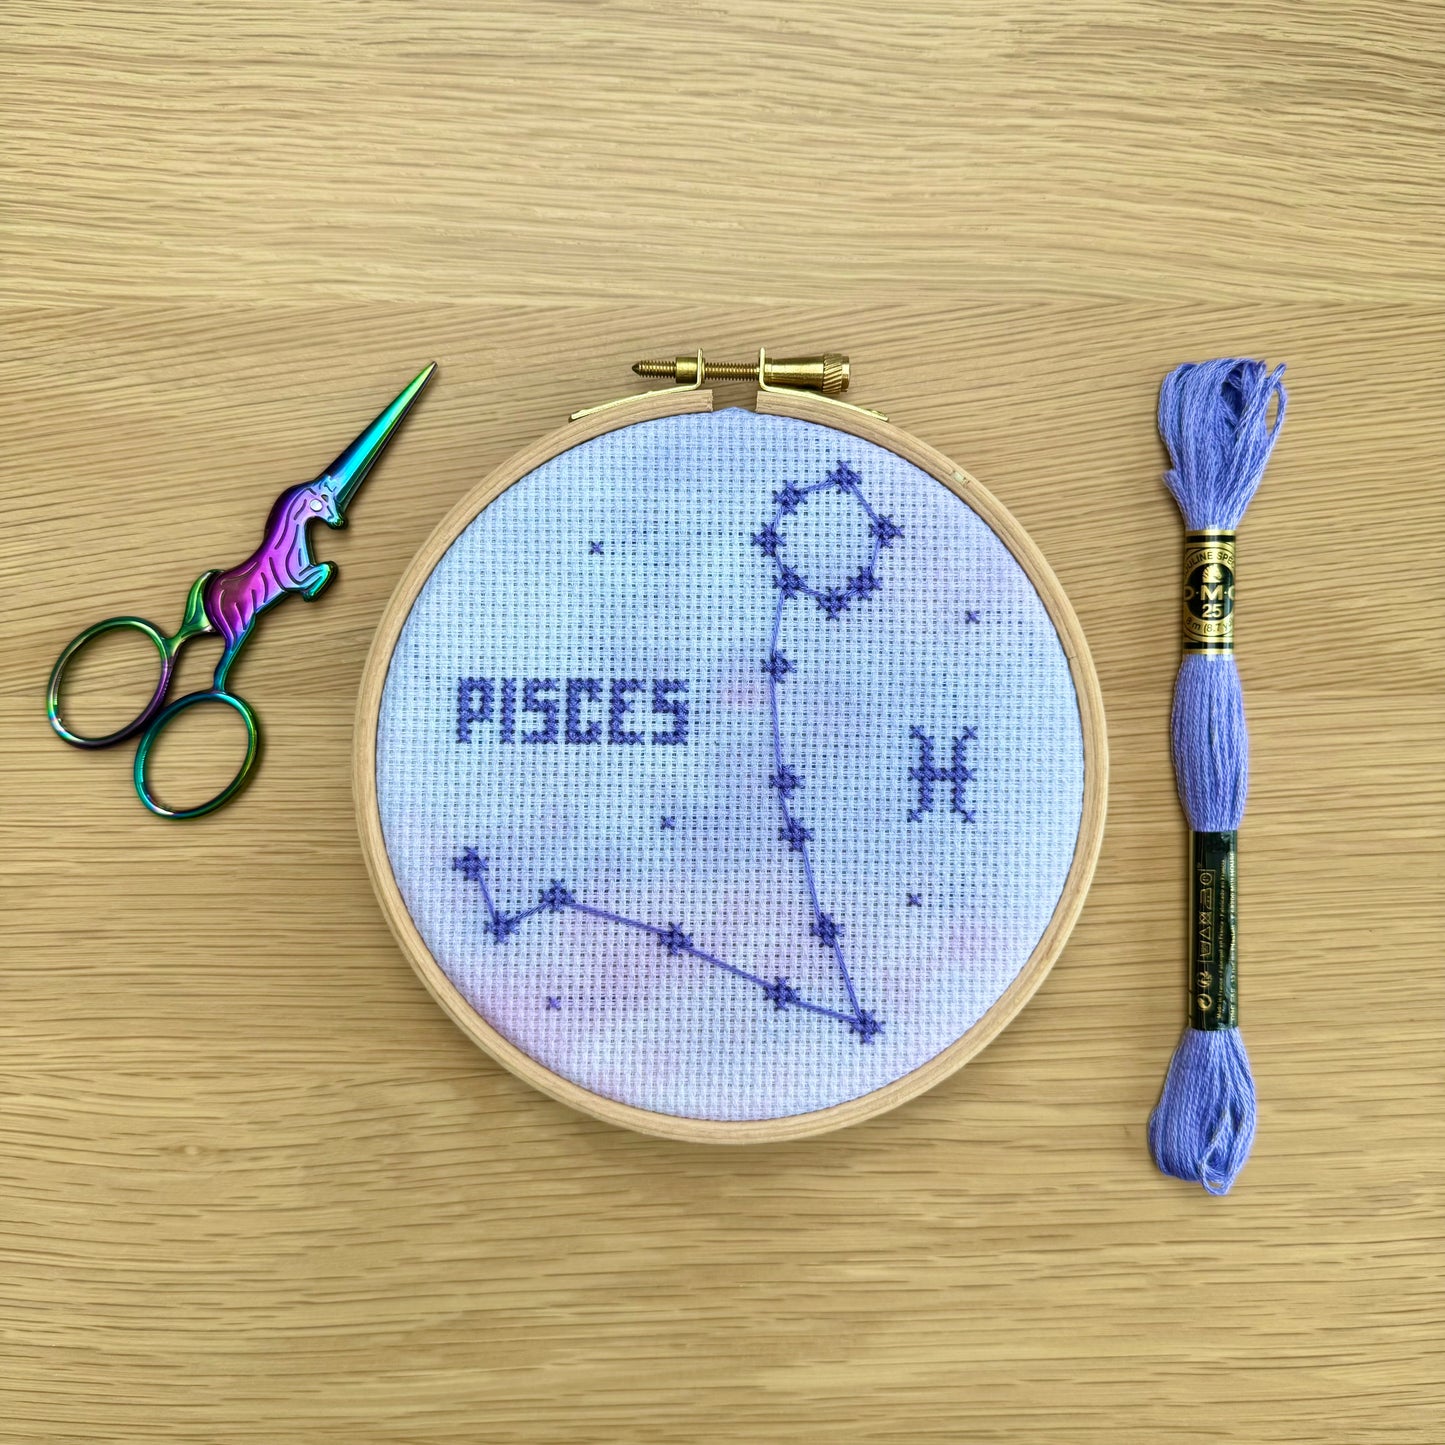 Pisces Constellation Galaxy Cross Stitch Pattern – PDF Download